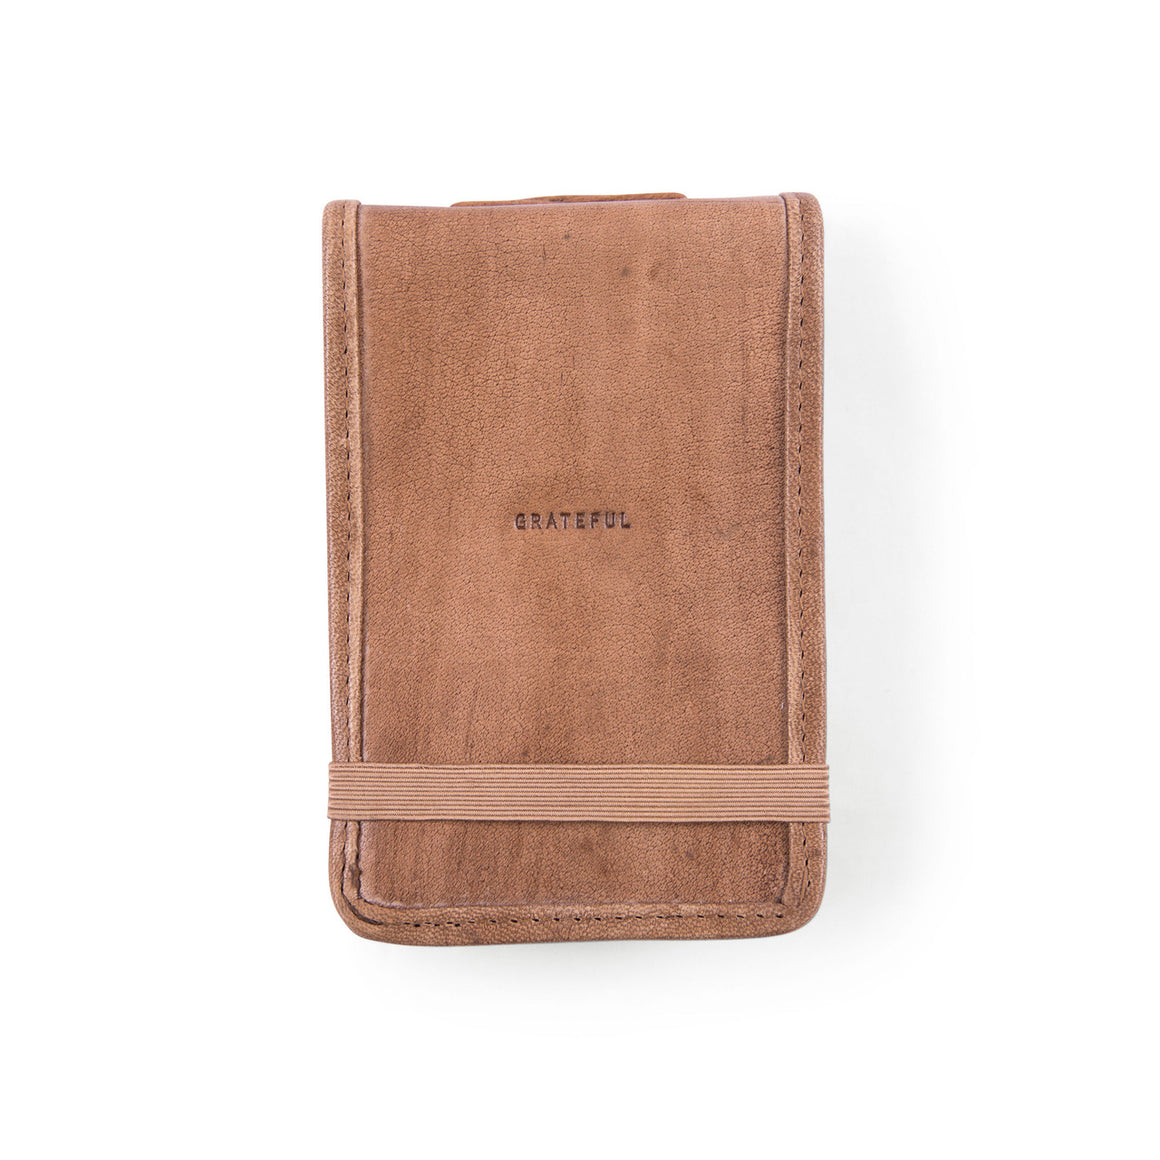 Leather Journal - Grateful (Mini)